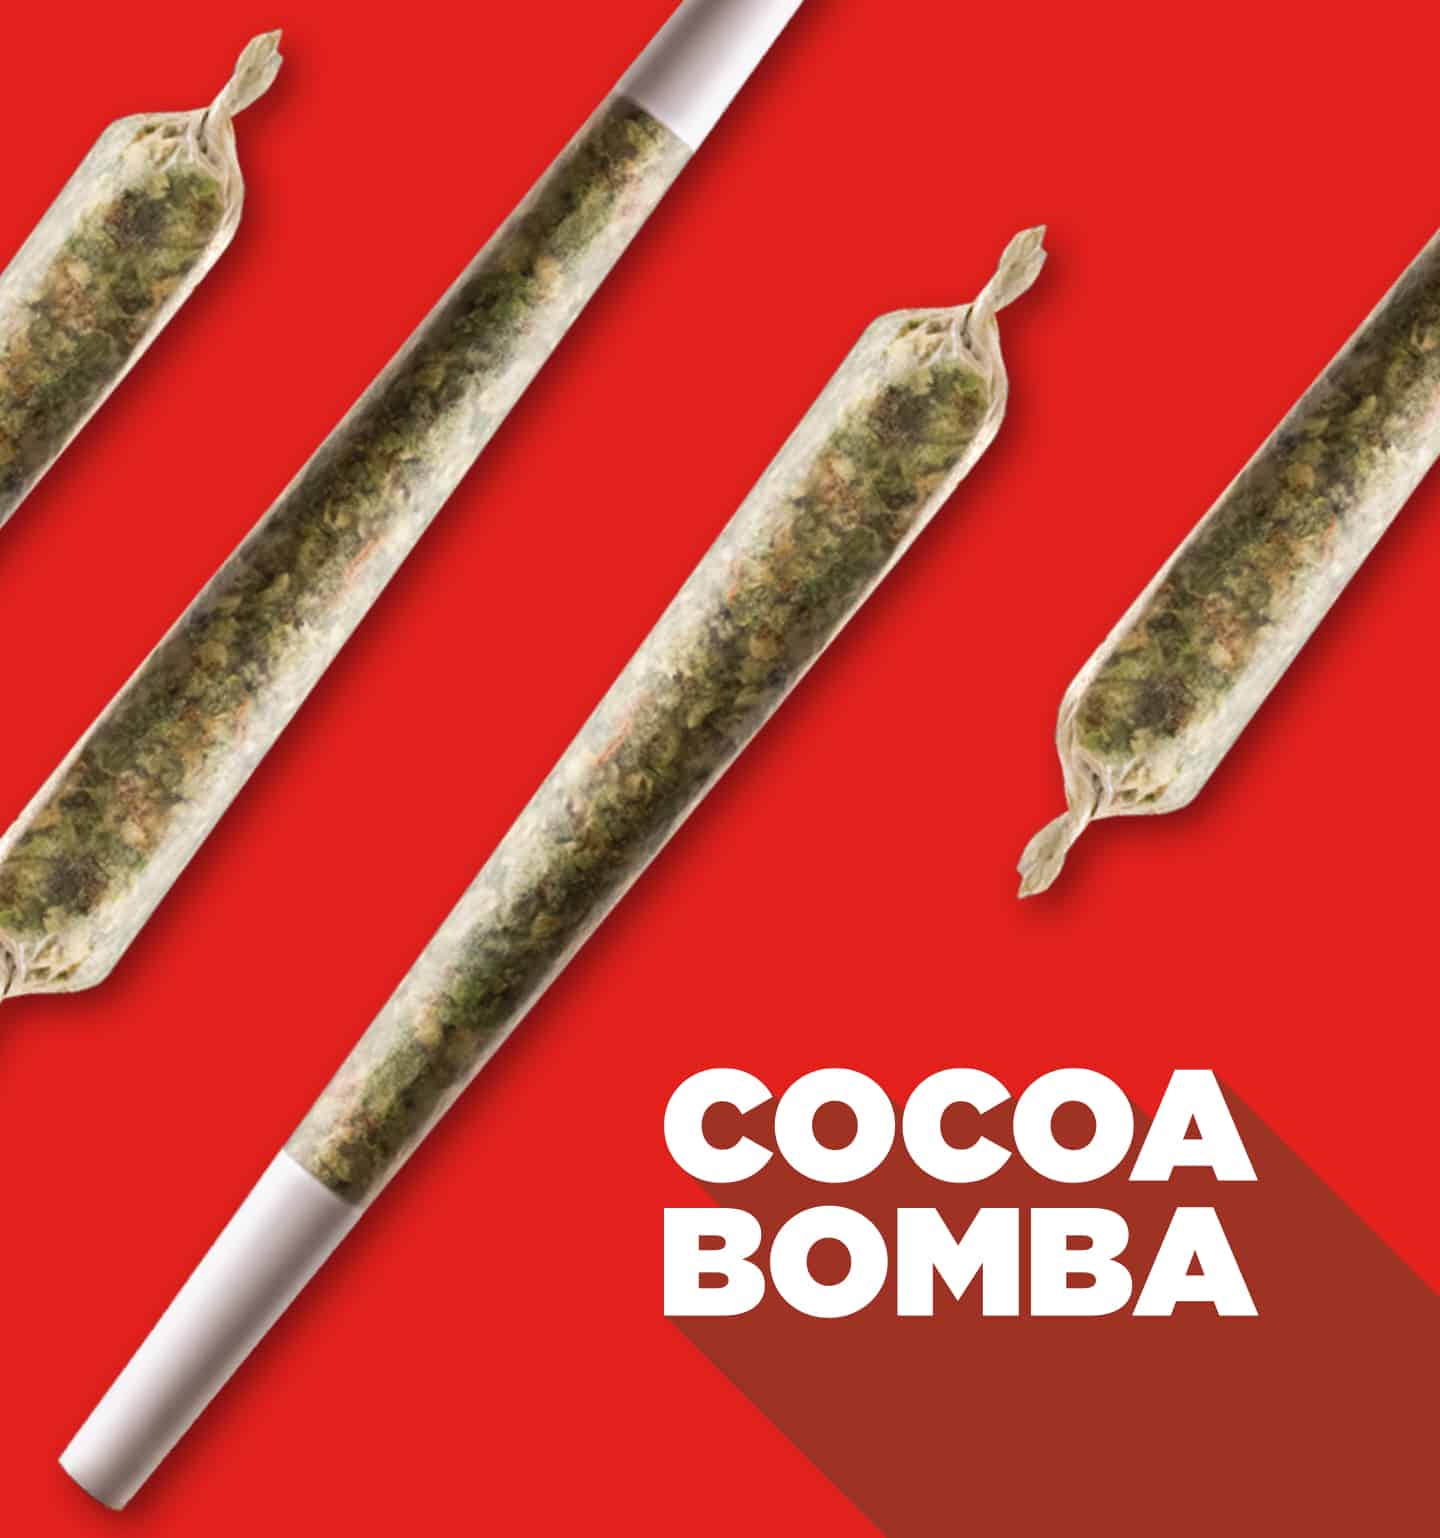 cocoa bomba strain